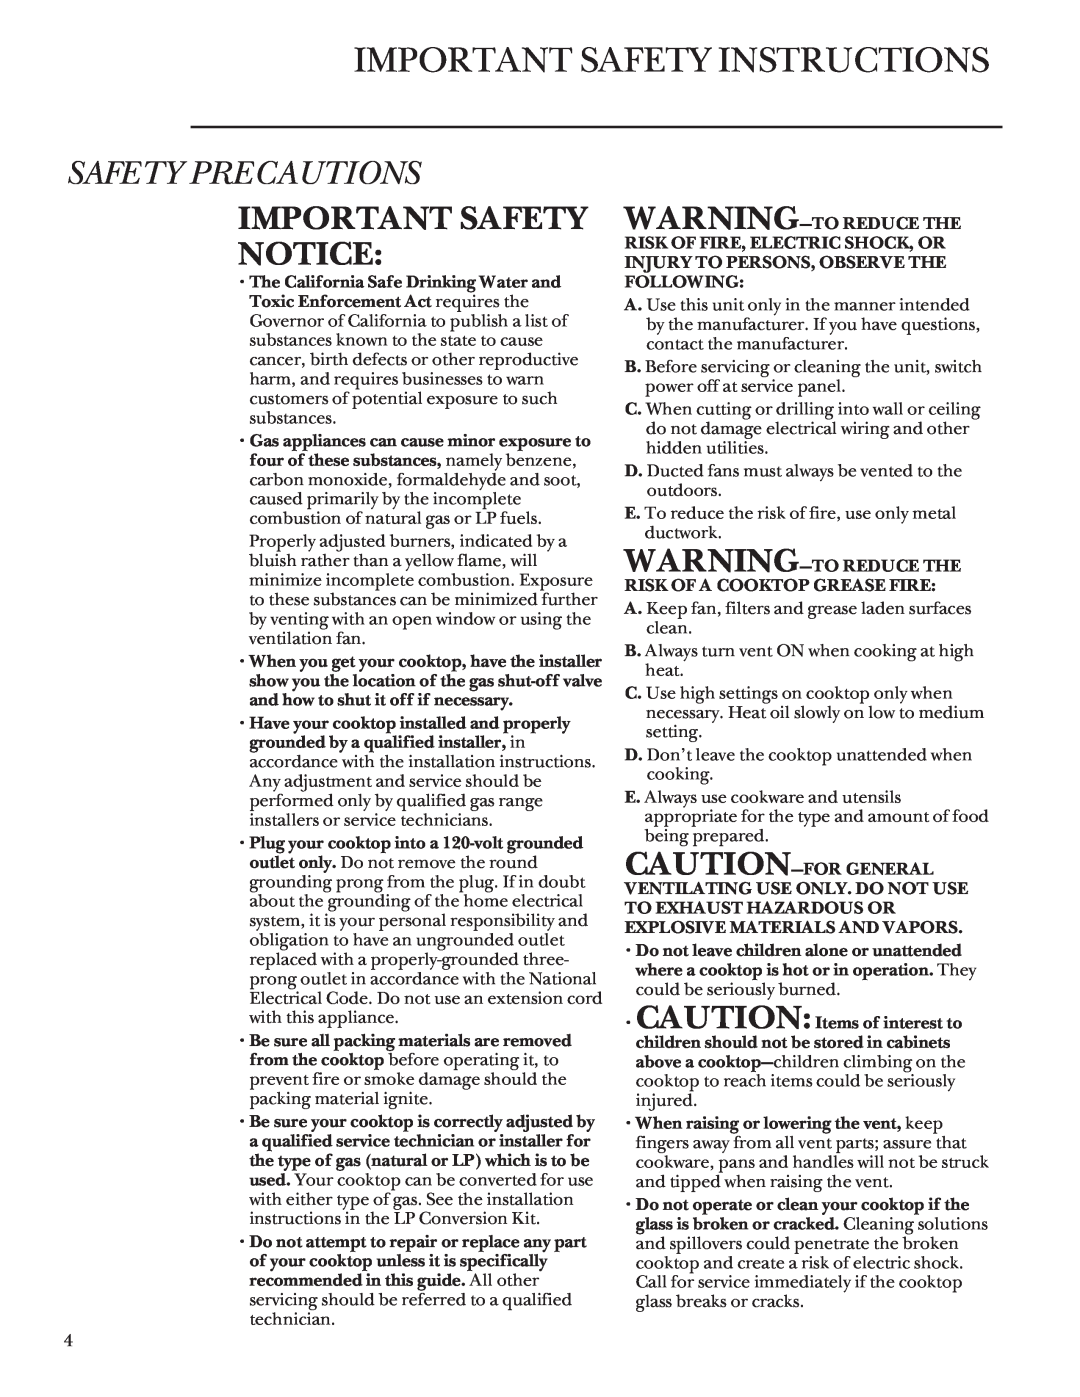 GE ZGU3650WBWG, ZGU3650BBBG, 183D5580P079 Important Safety Instructions, Important Safety Notice, Safety Precautions 